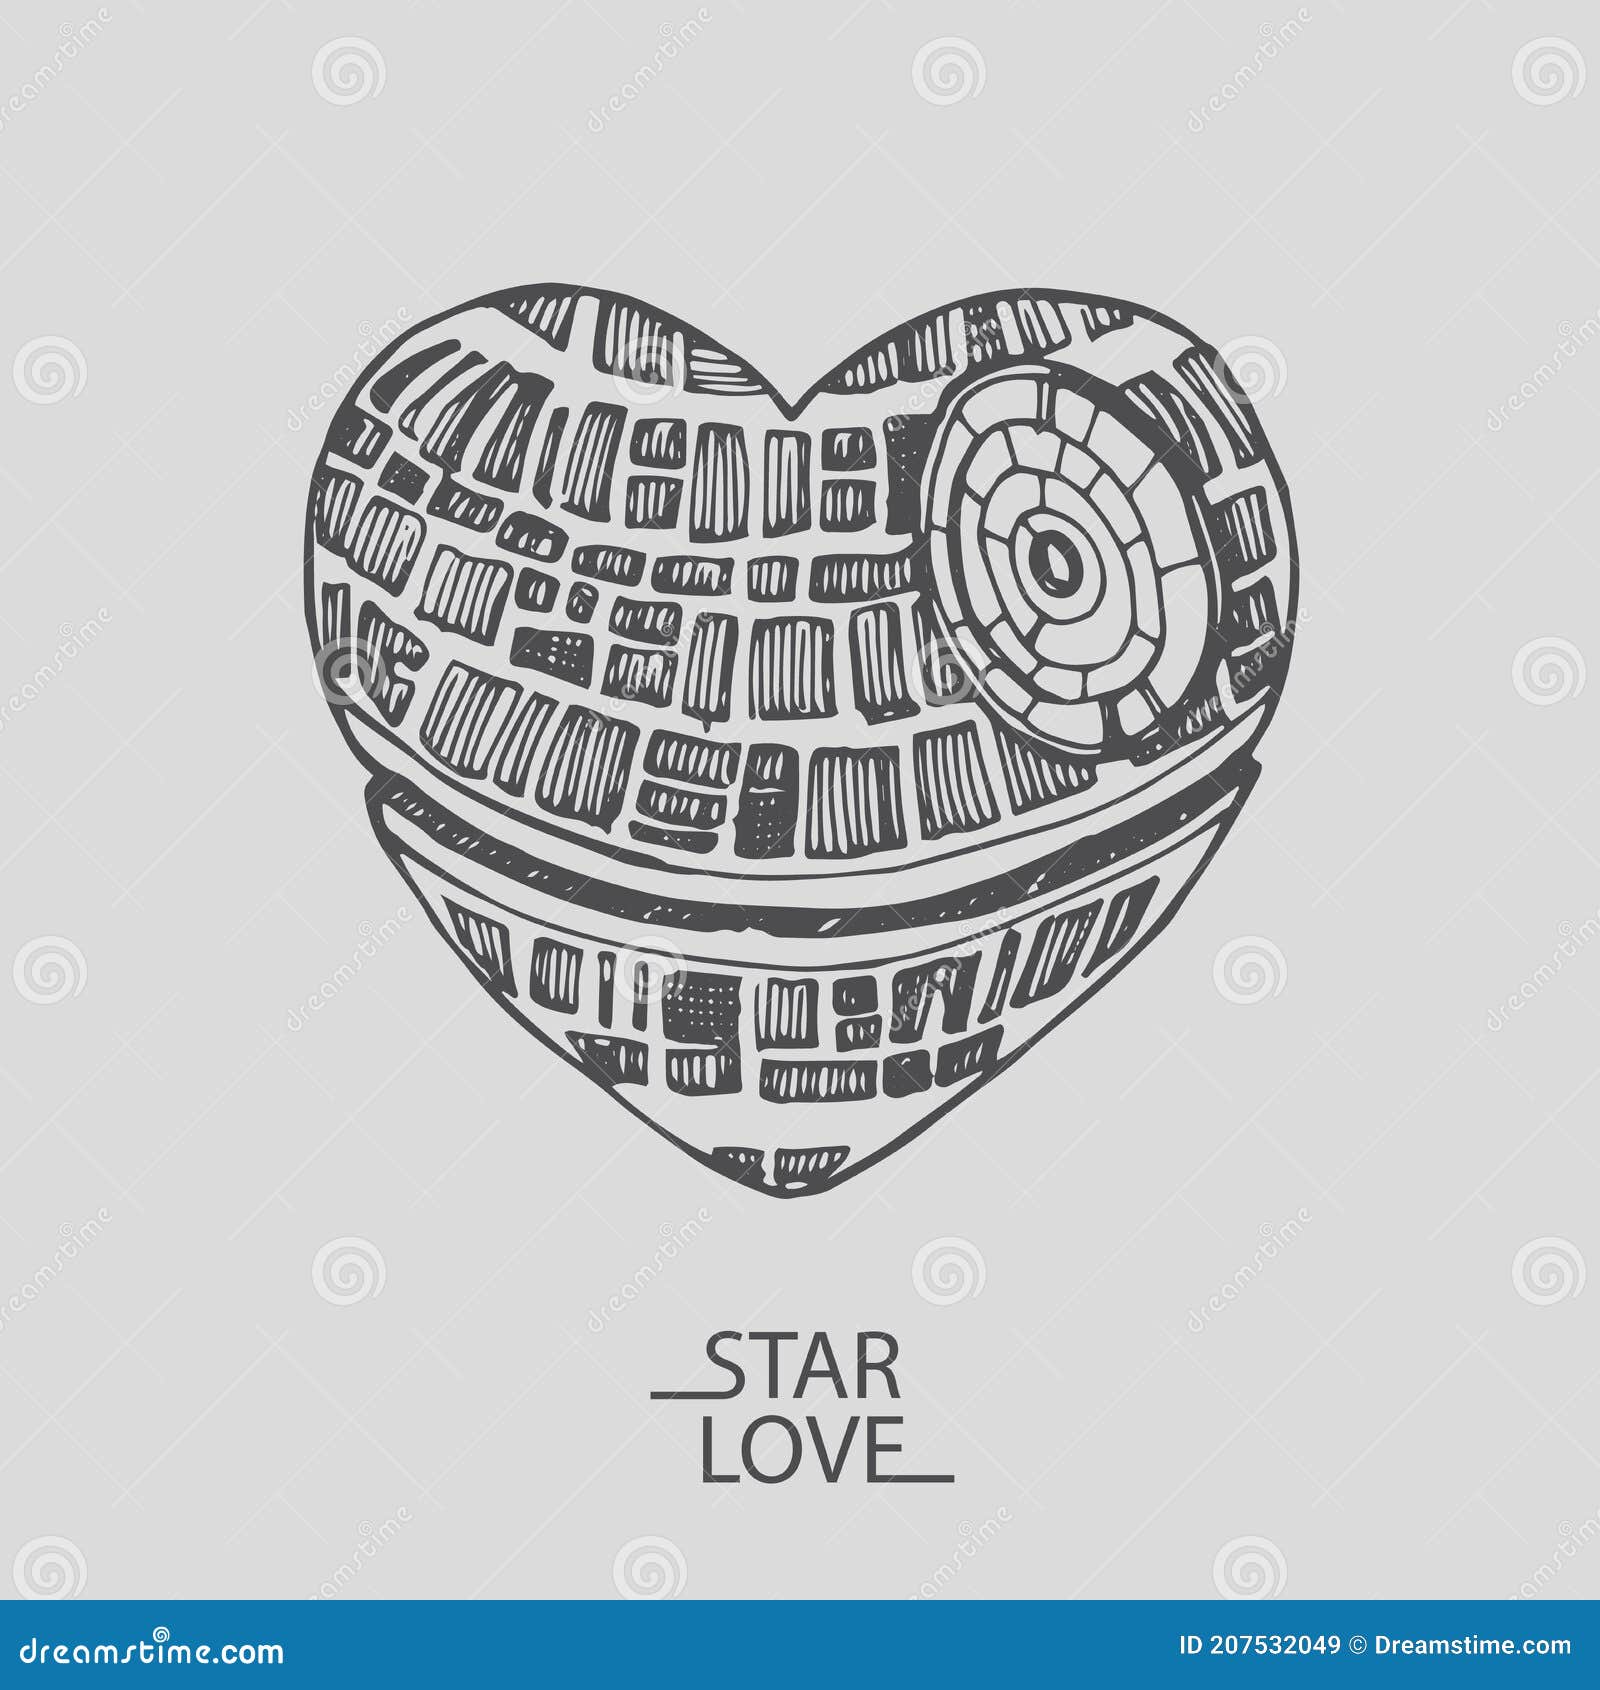 sketch  of a love heart star wars valentine's day